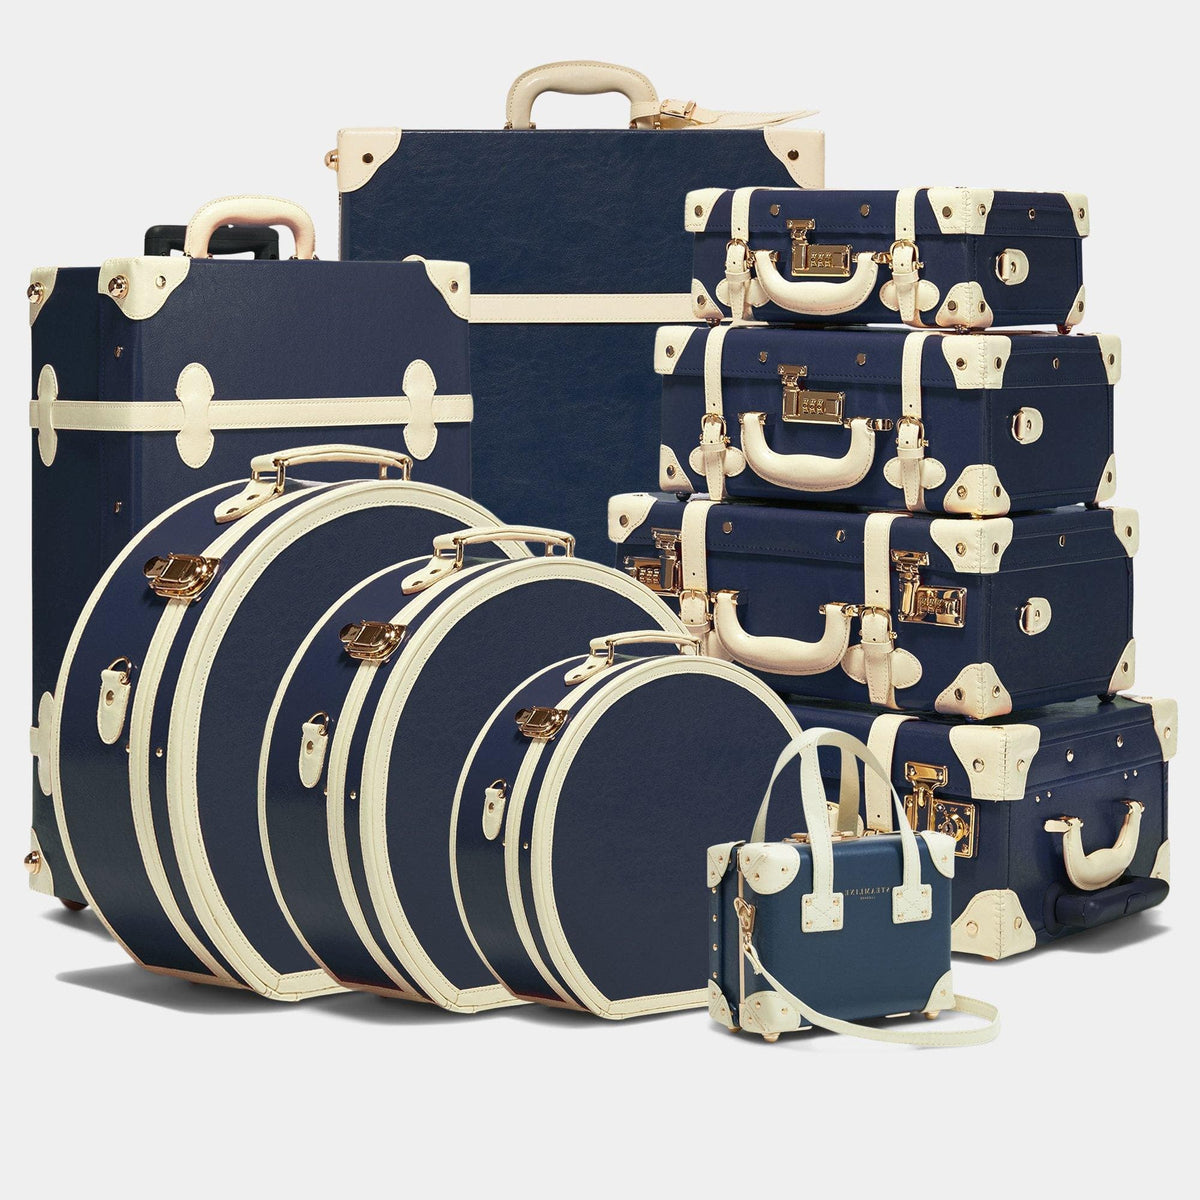 The Entrepreneur - Navy Large Hatbox Hatbox Large Steamline Luggage 